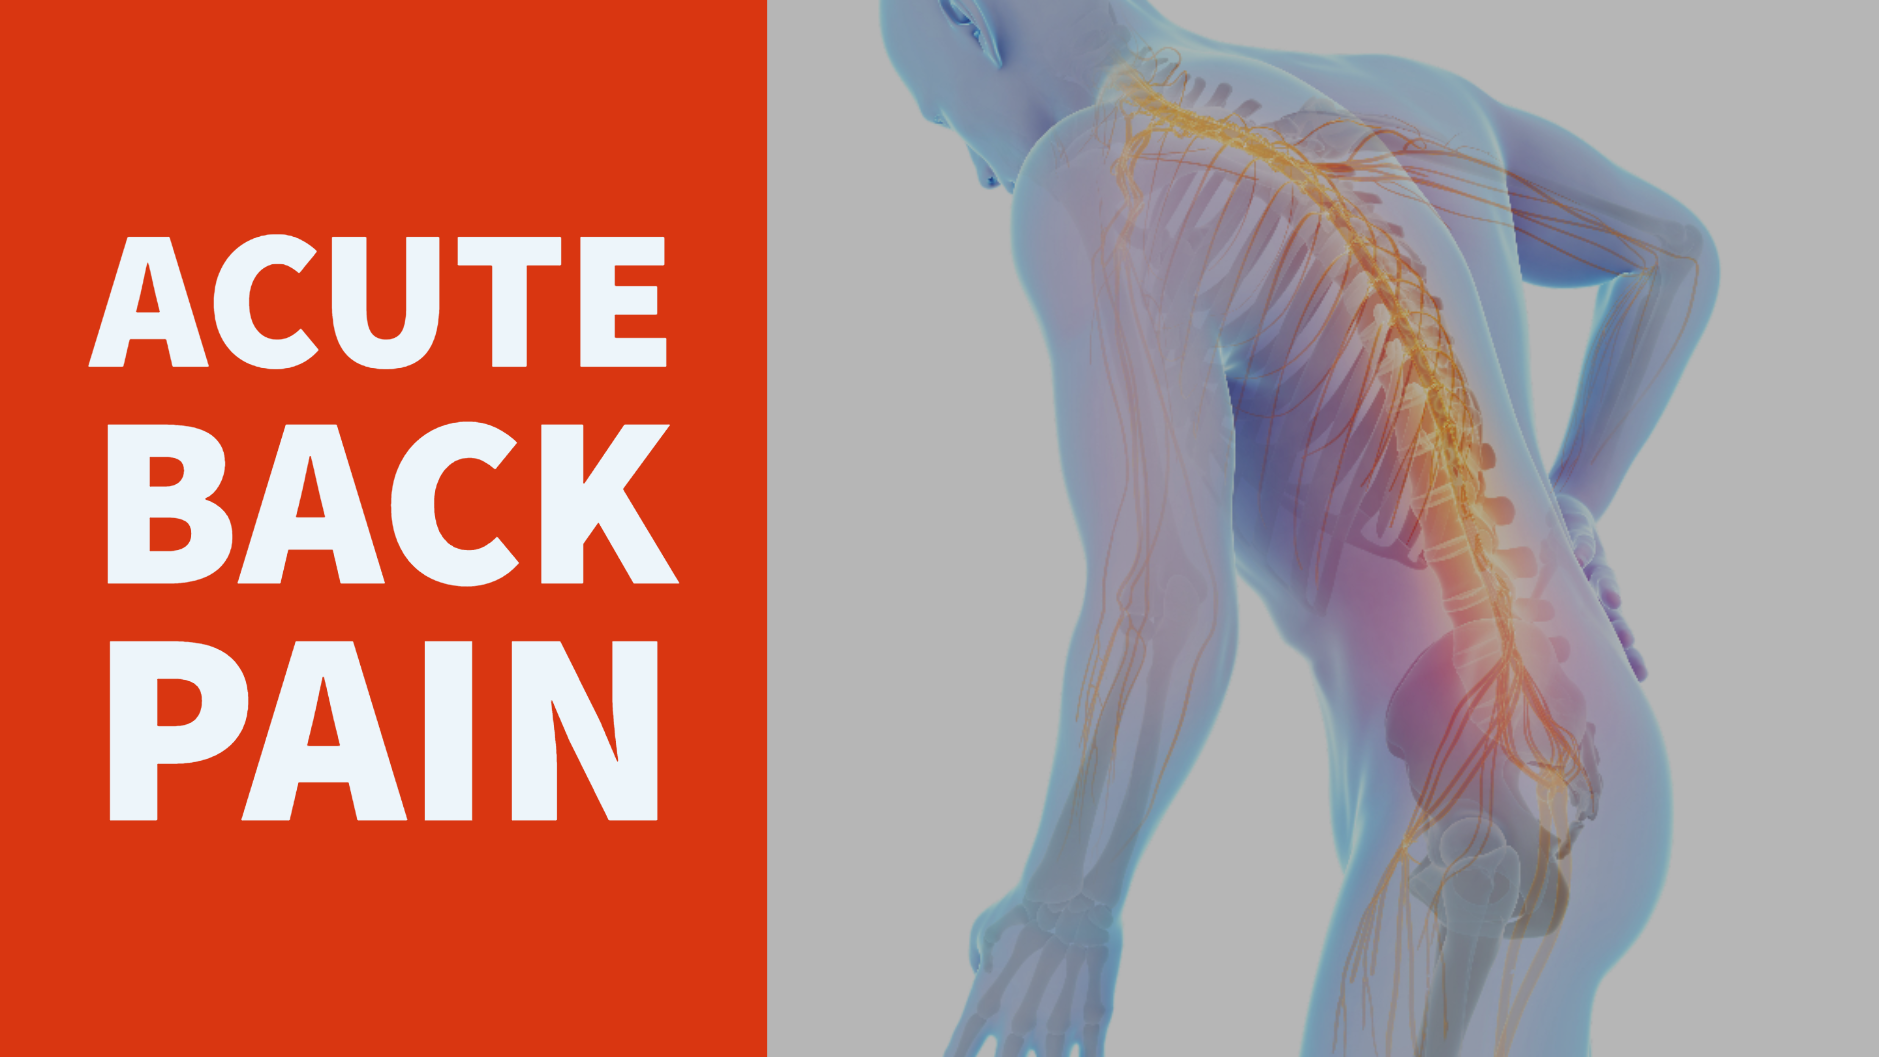 VIDEO: Acute Back Pain